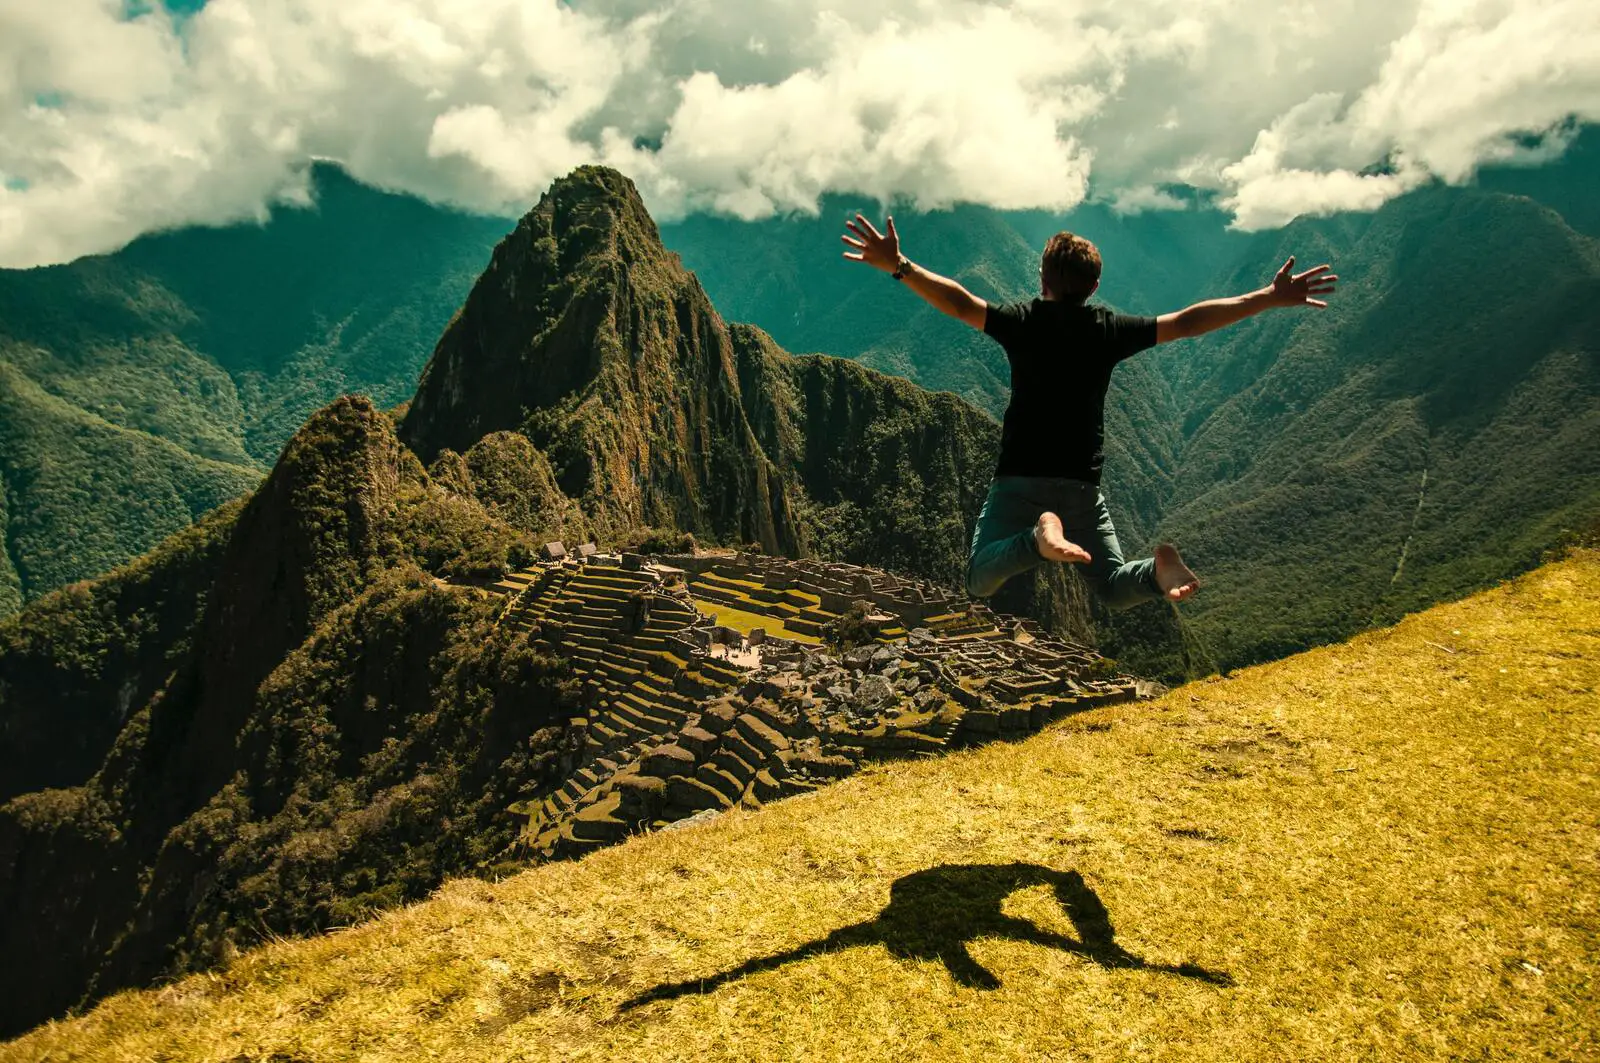 About Journey Machu Picchu